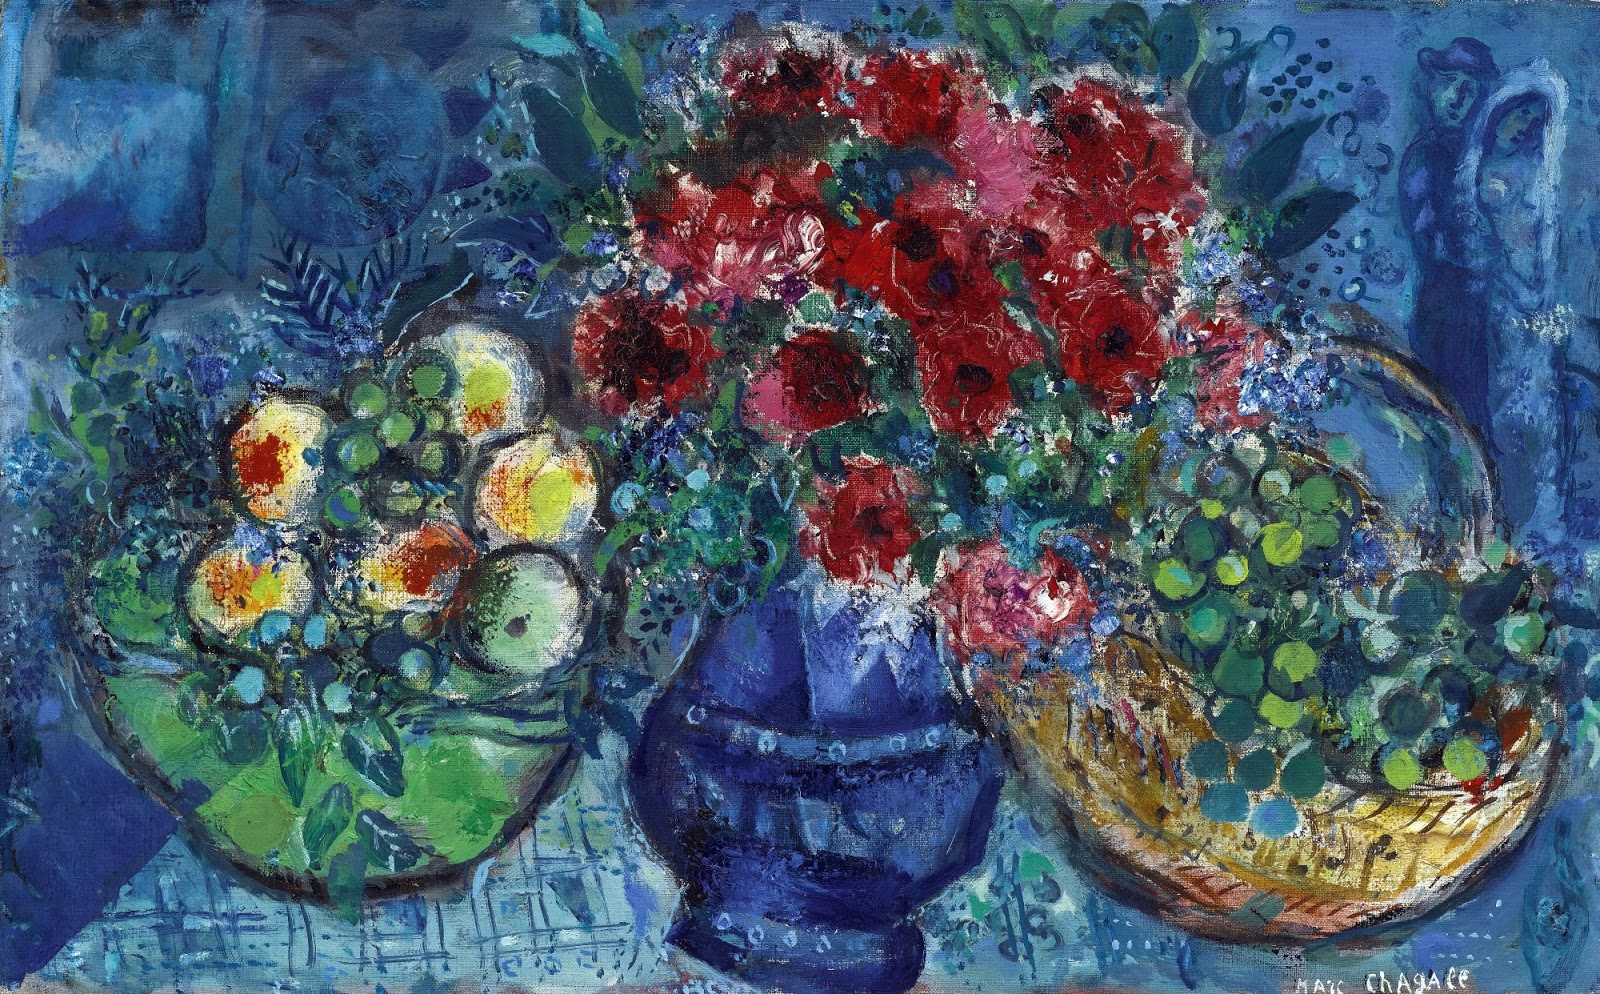 Marc+Chagall-1887-1985 (263).jpg